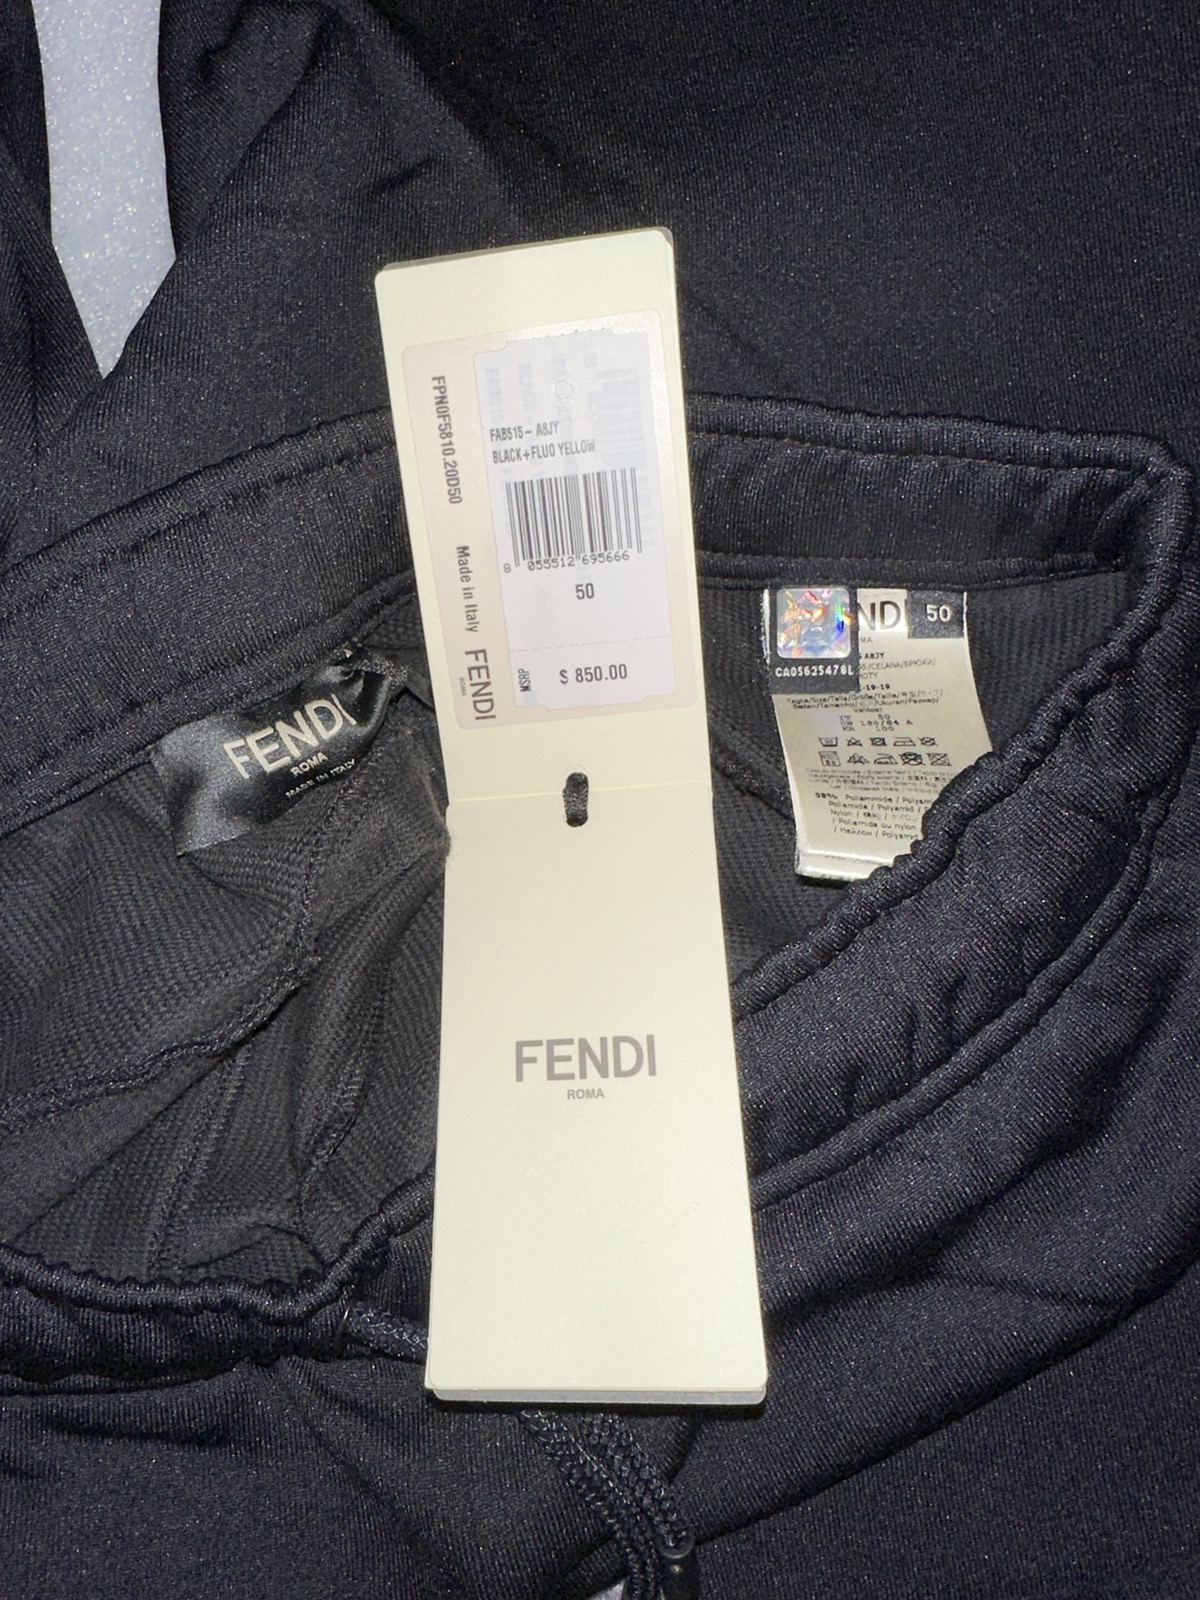 Fendi Mesh Logo Sweatpants - Size 50 - Brand New With Tags! - 9